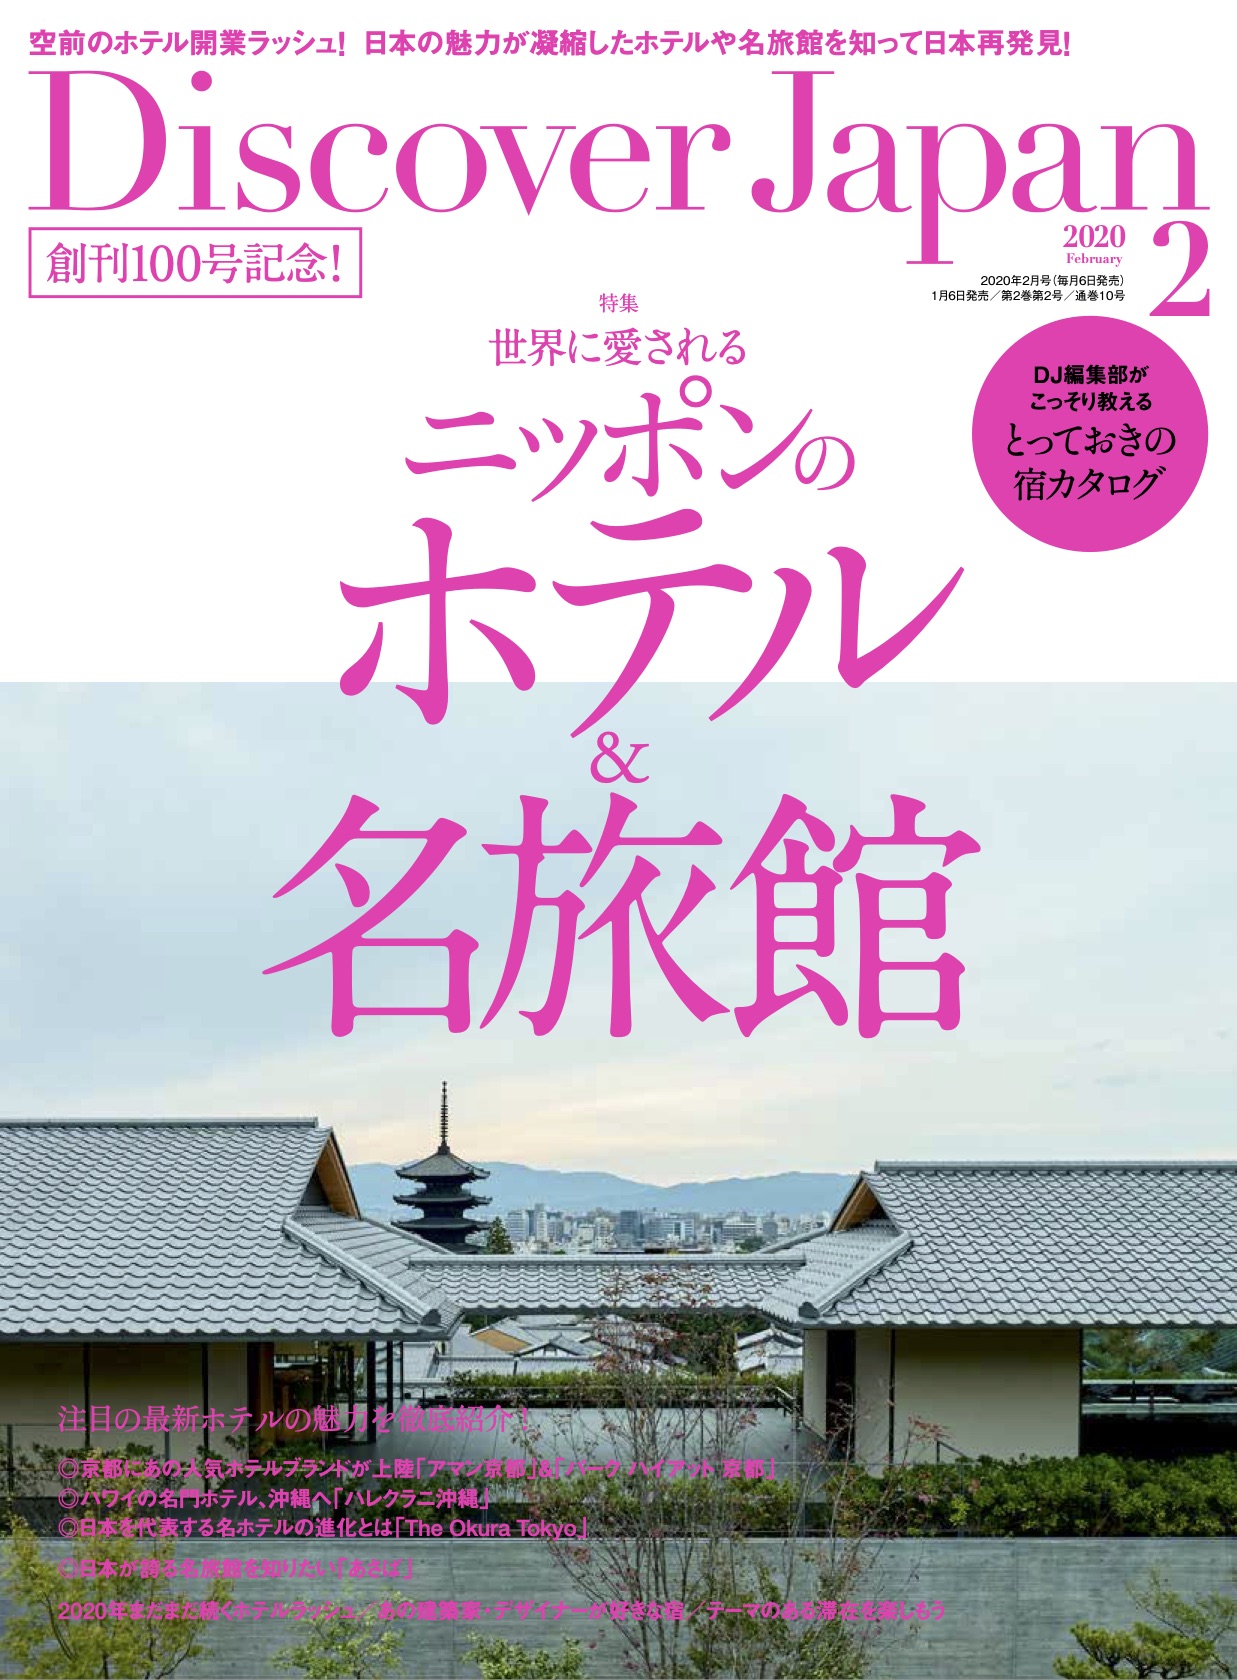 Discover Japan 2020年2月号 vol.100